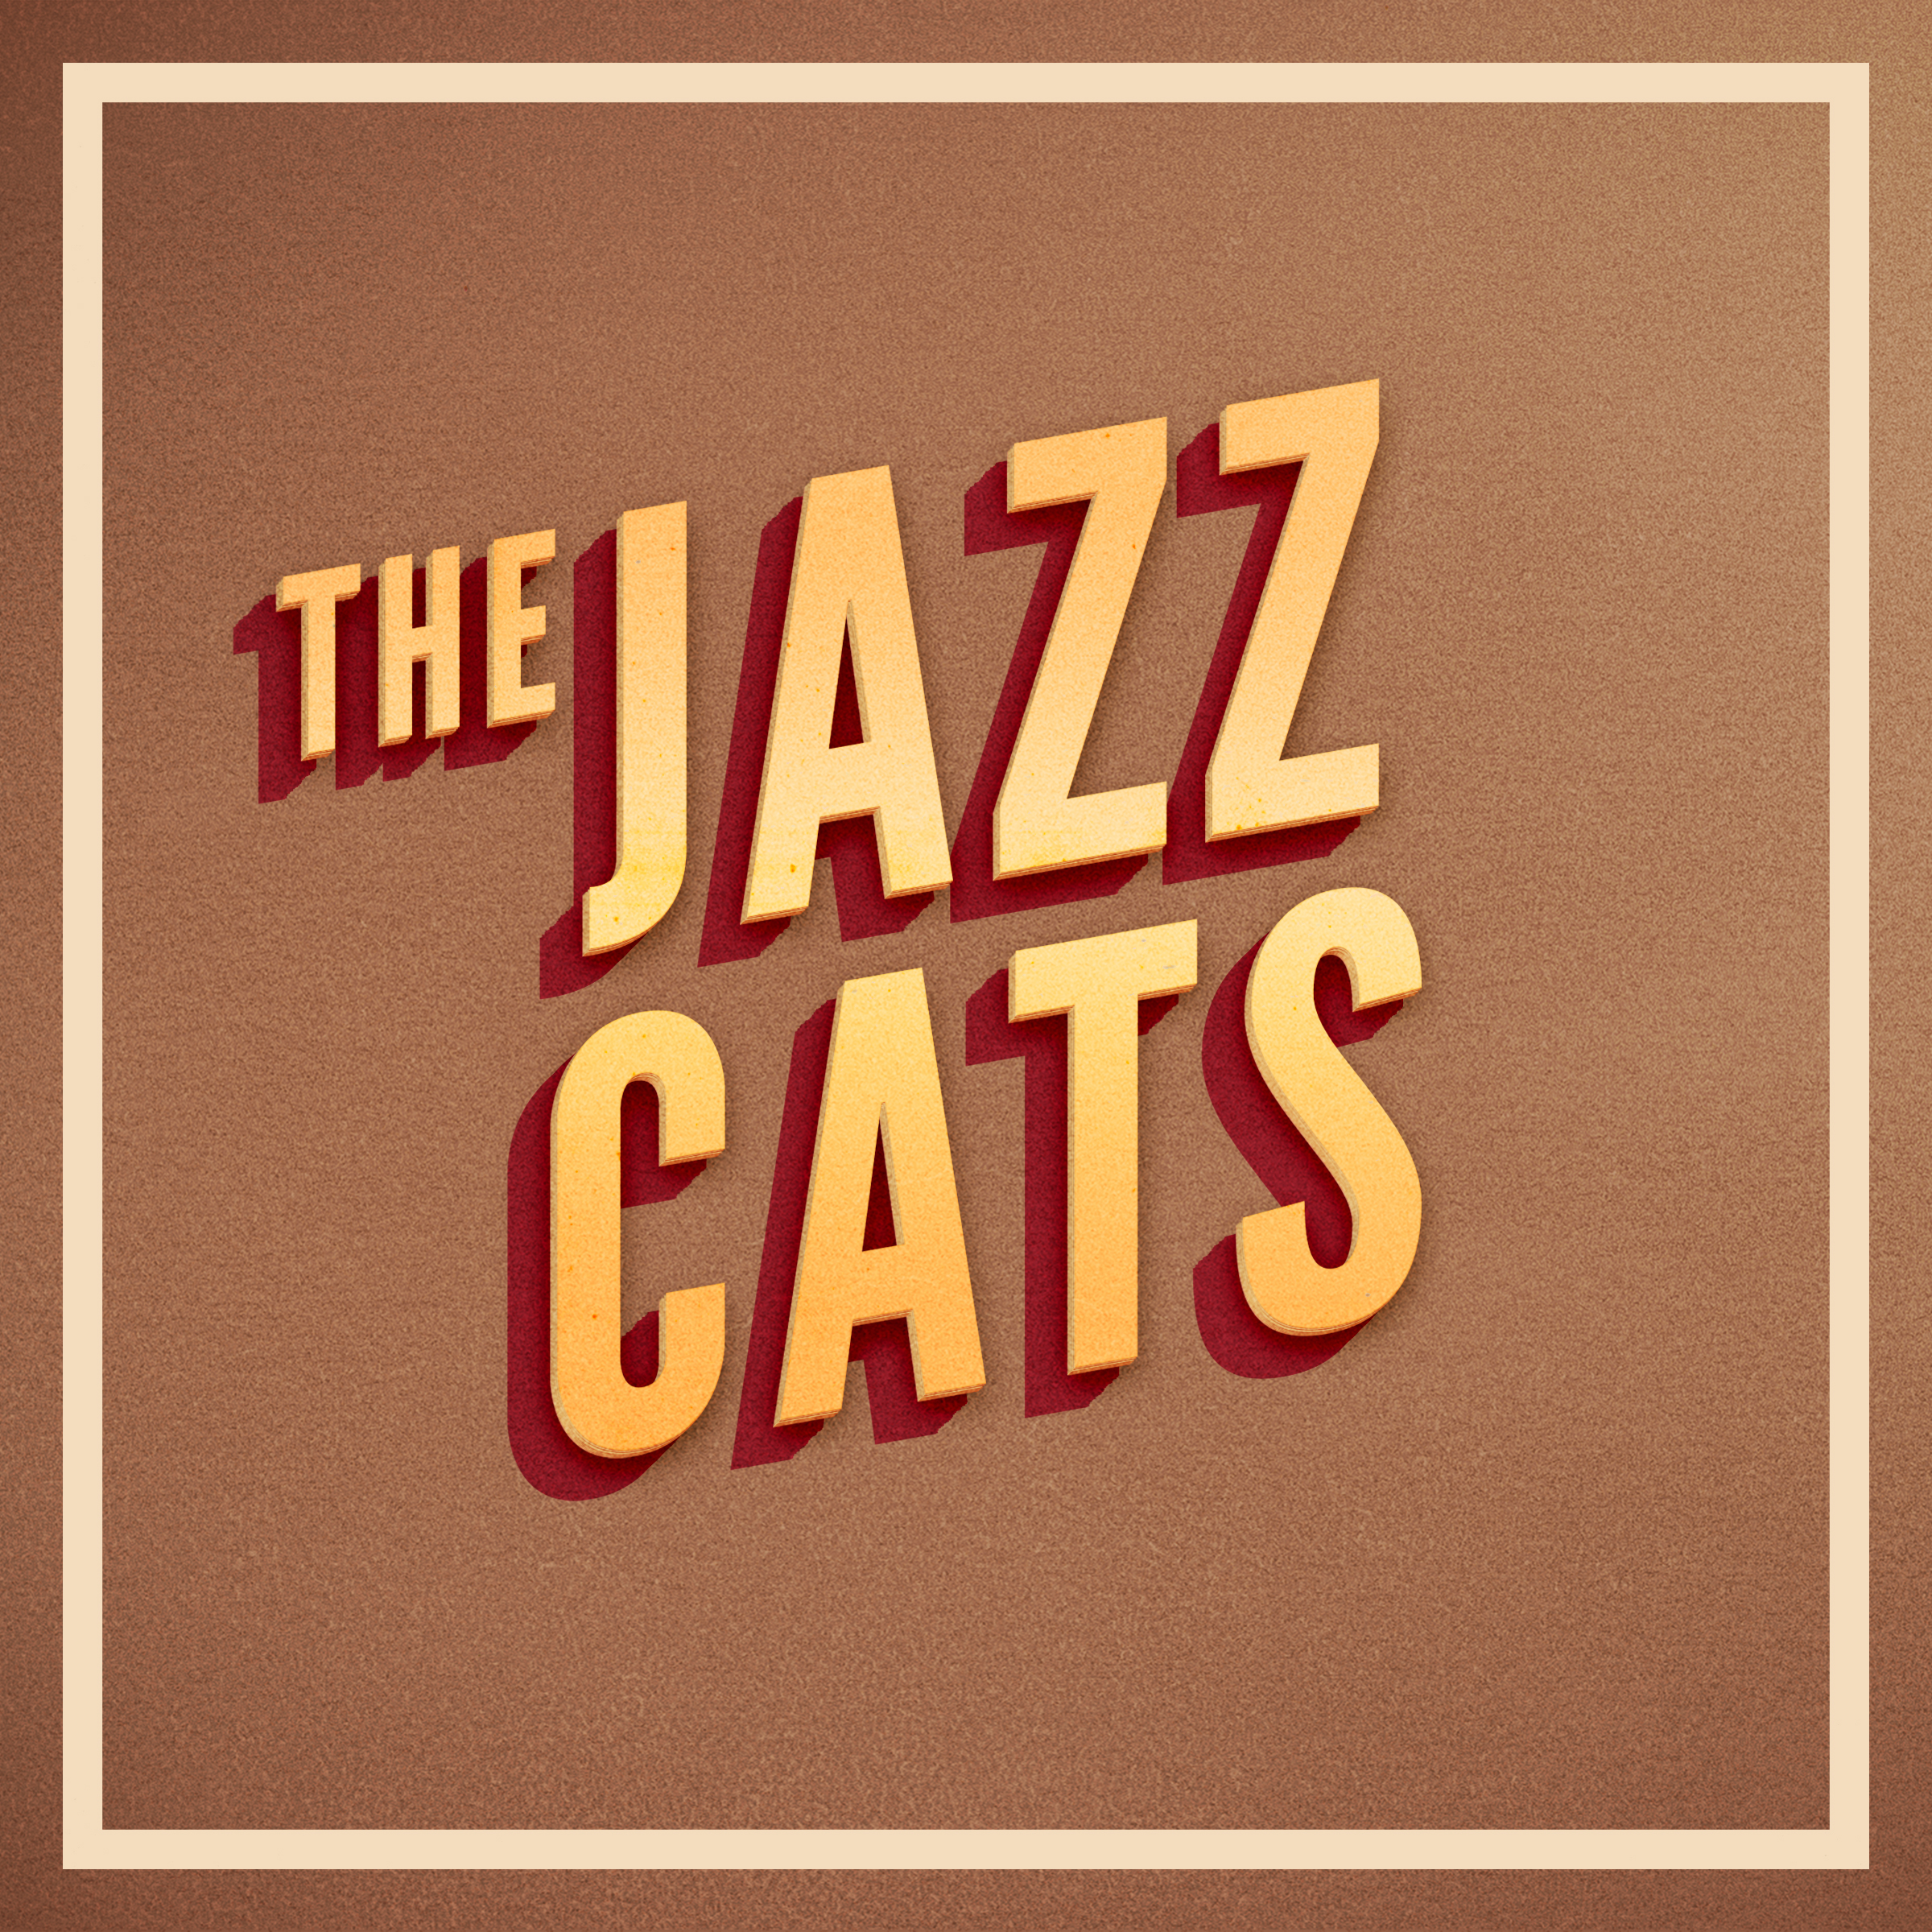 The Jazz Cats